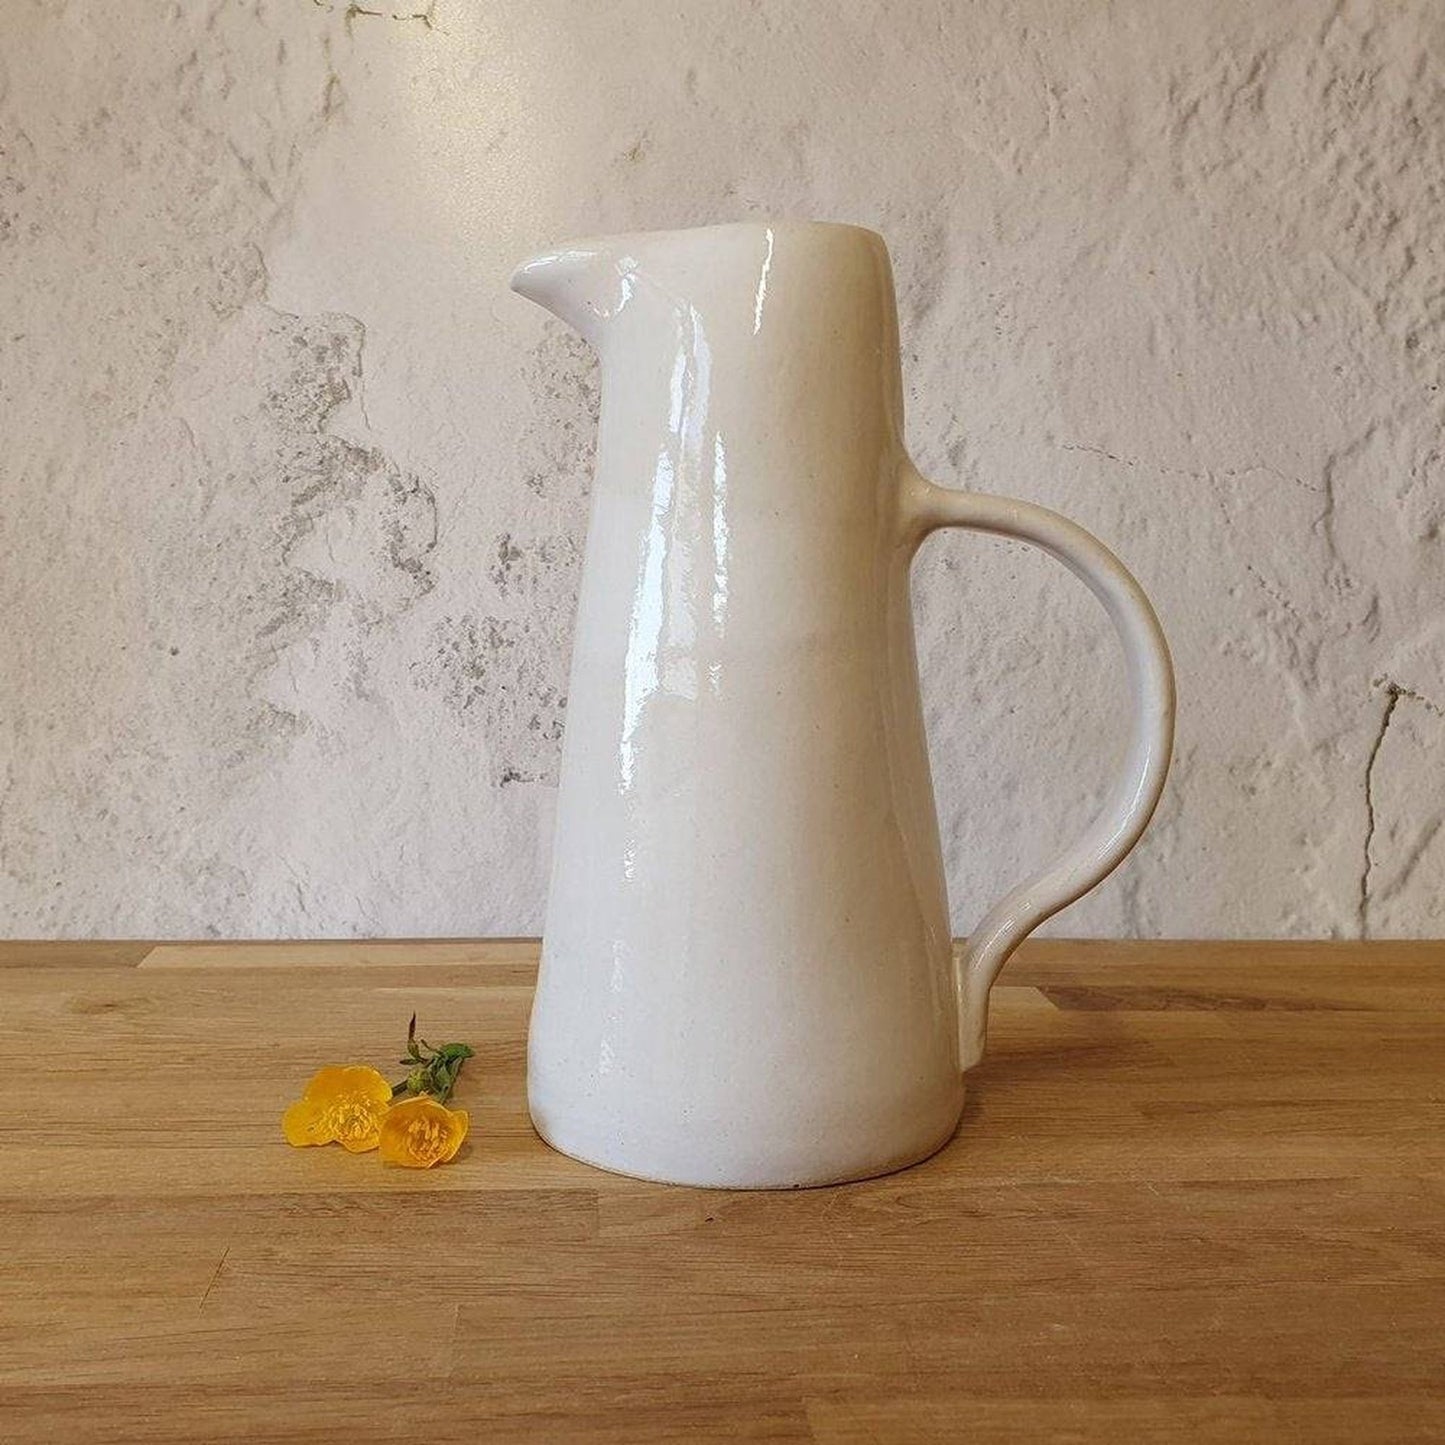 Handmade pottery jug white